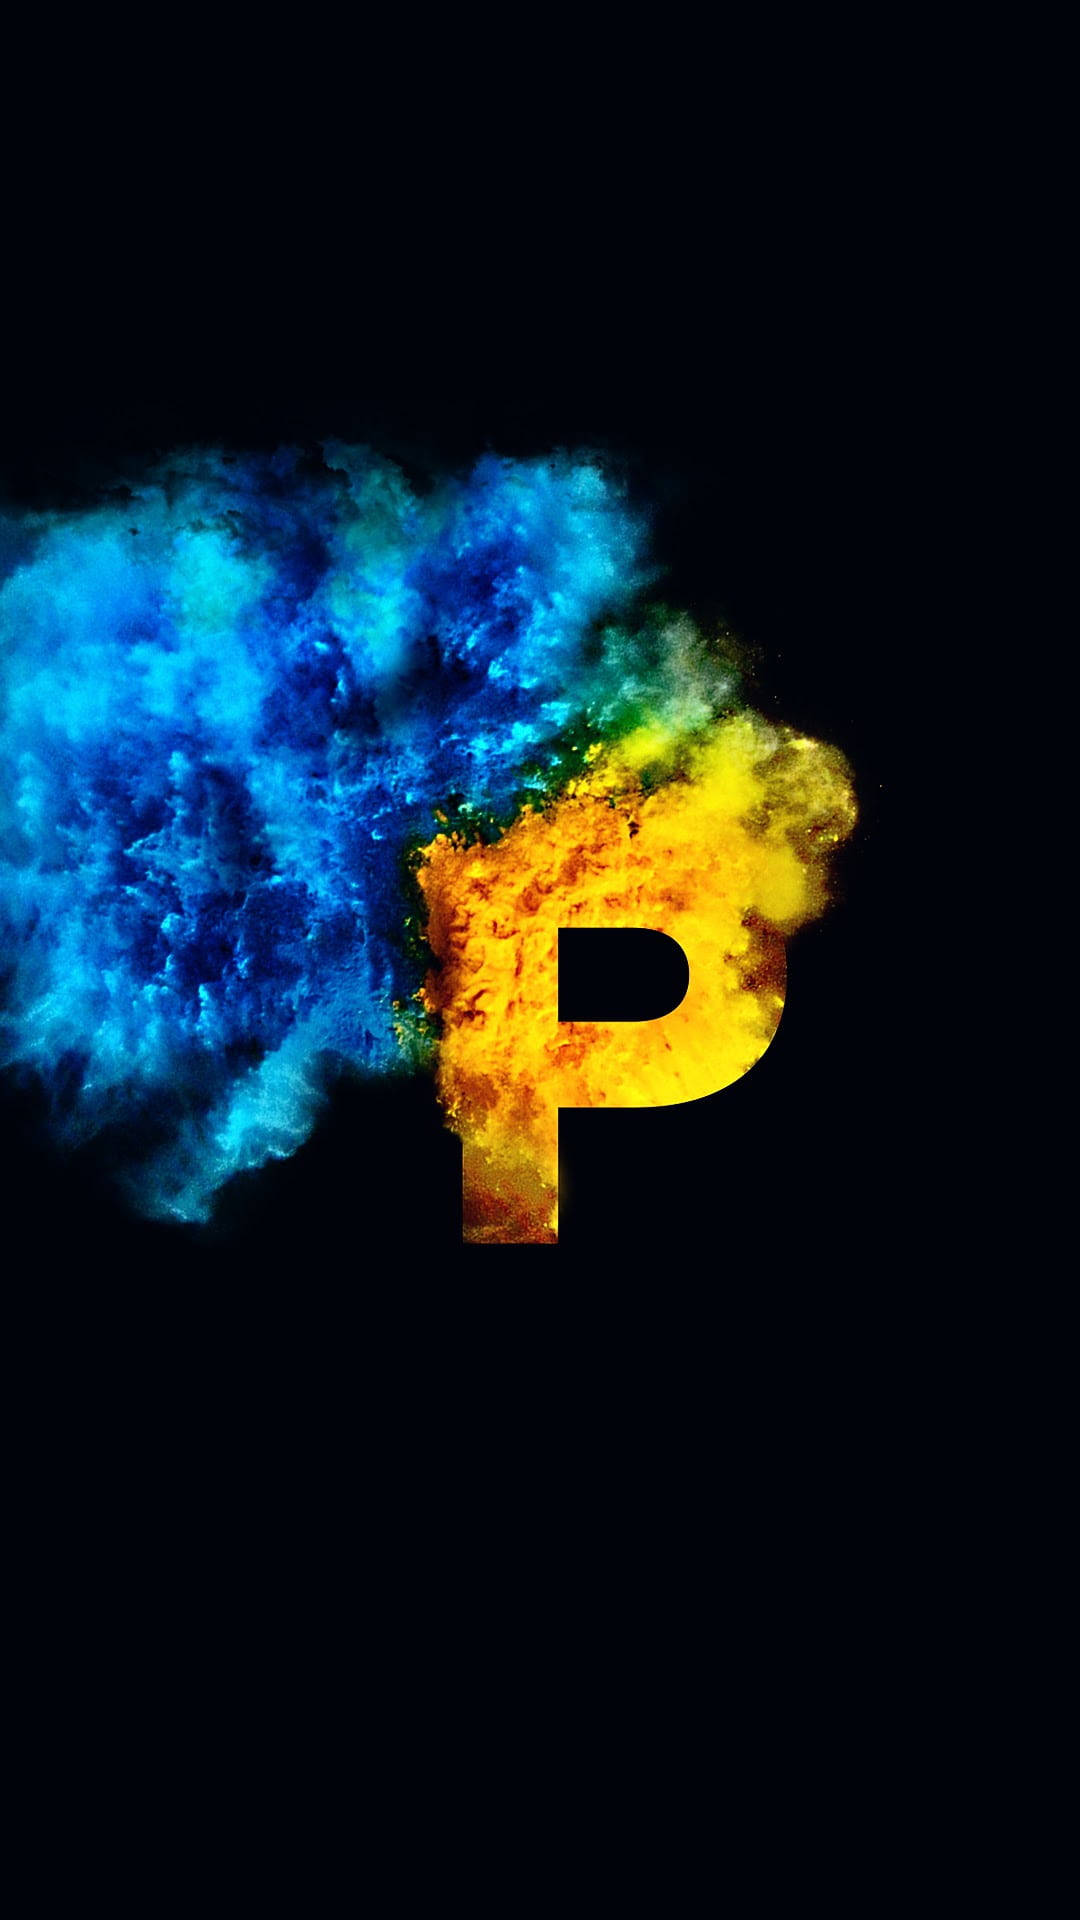 P Letter With Smoke Splash Background